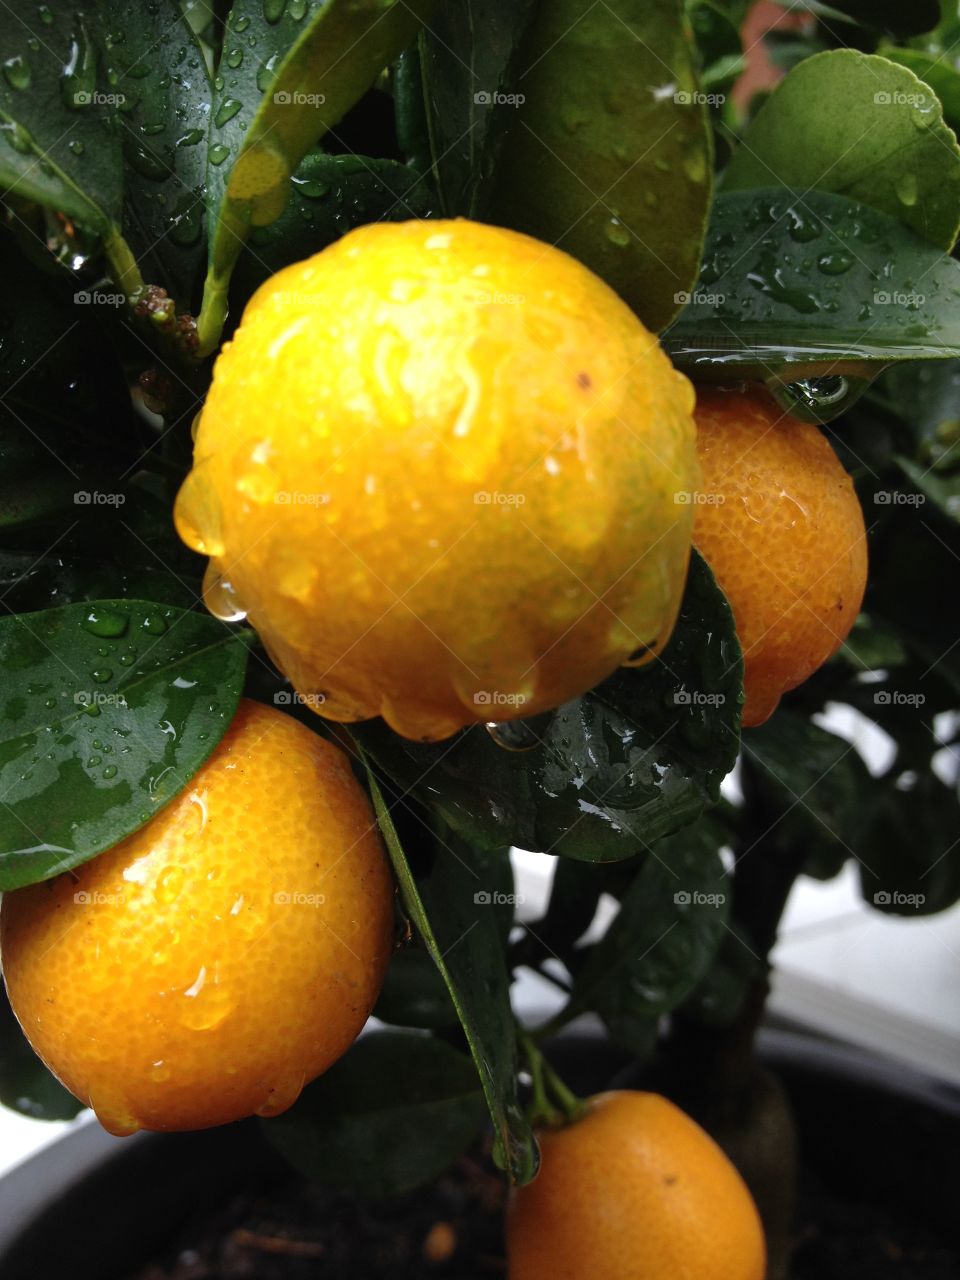 Homegrown oranges